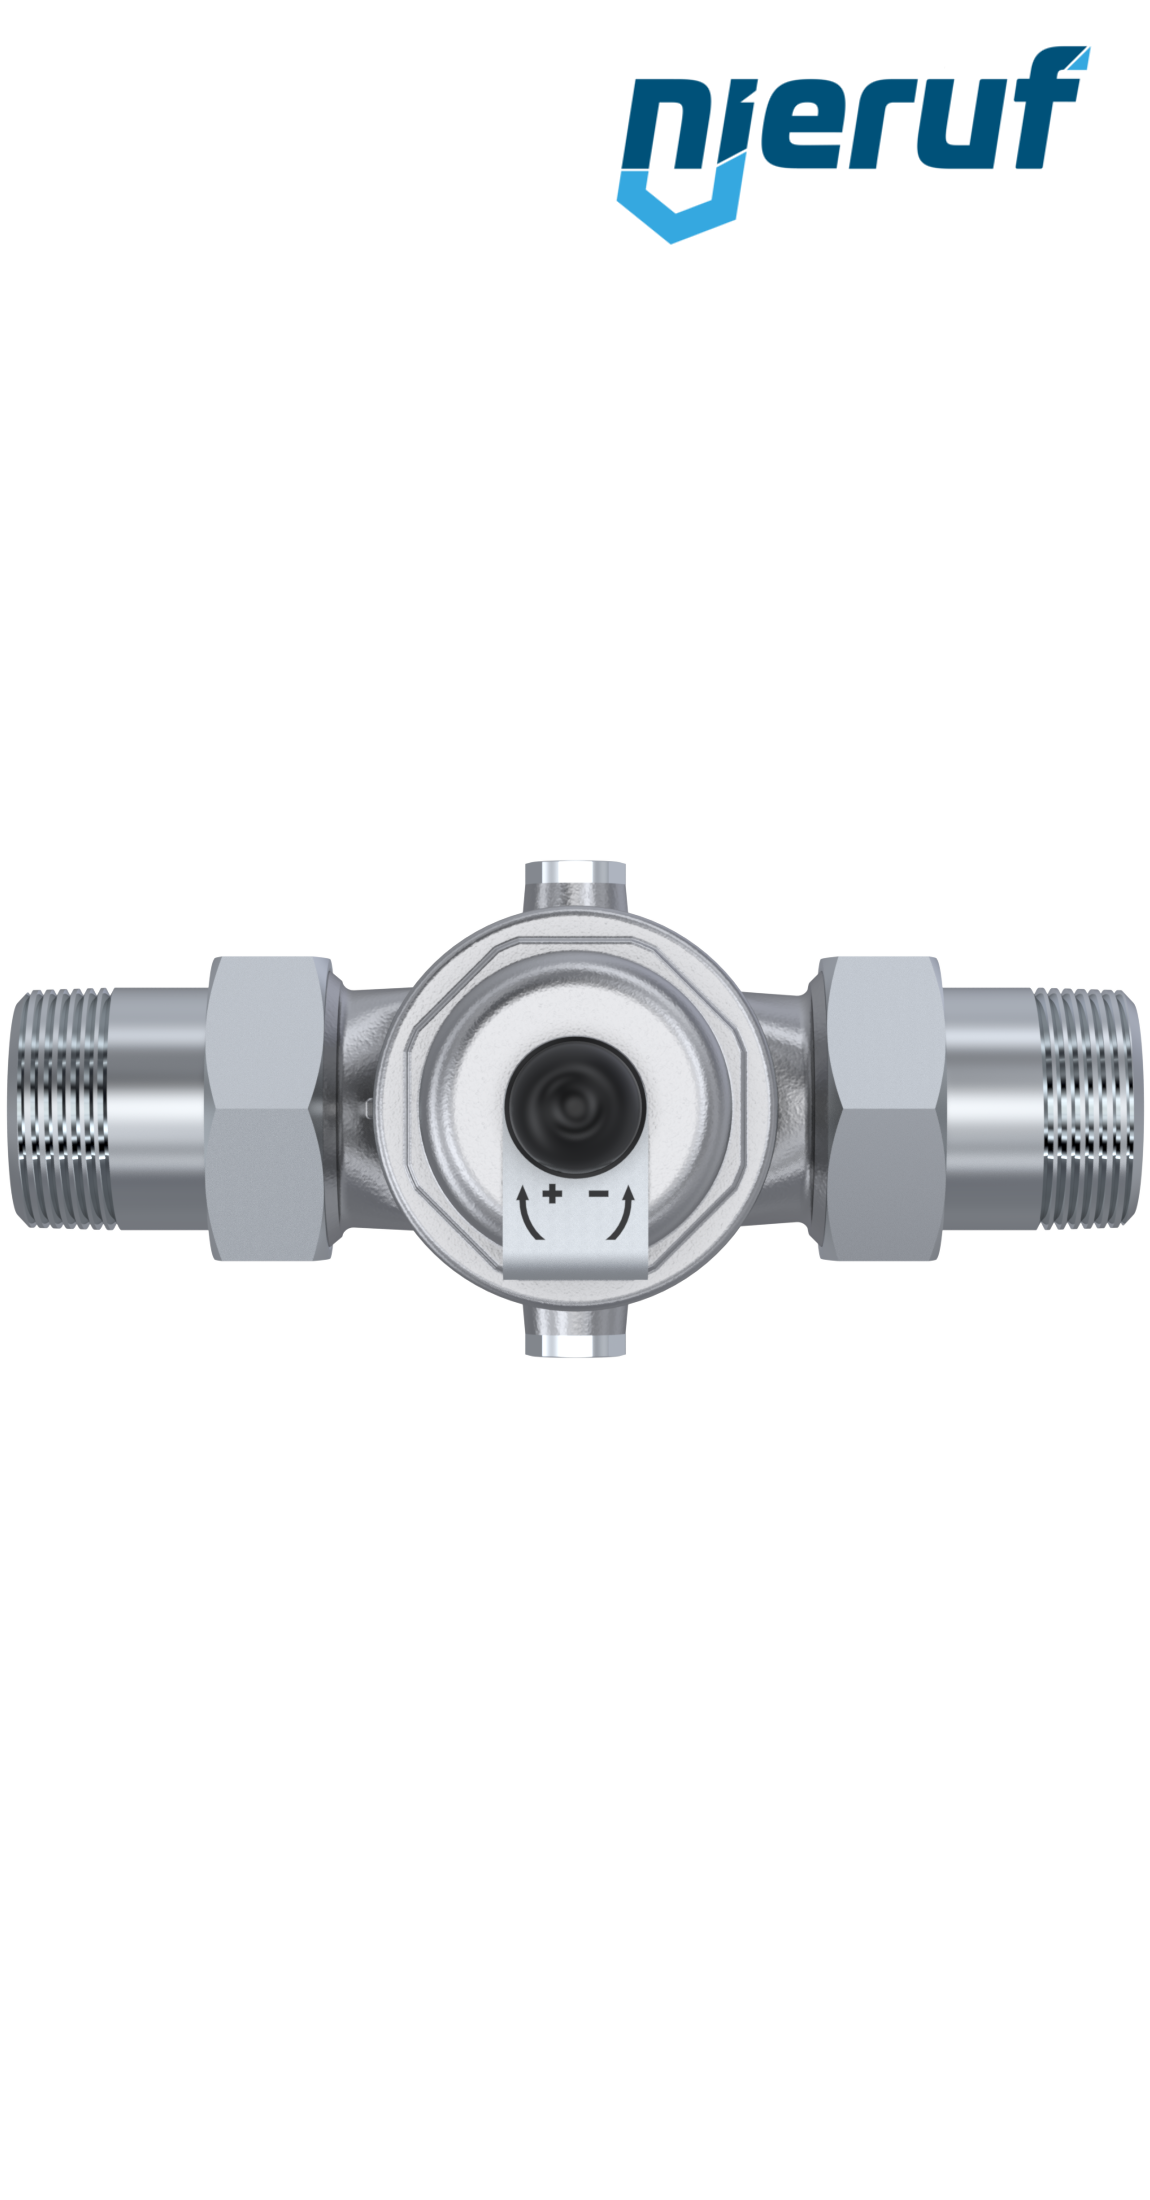 pressure reducing valve 2" inch male thread DM03 stainless steel EPDM 5.0 - 15.0 bar